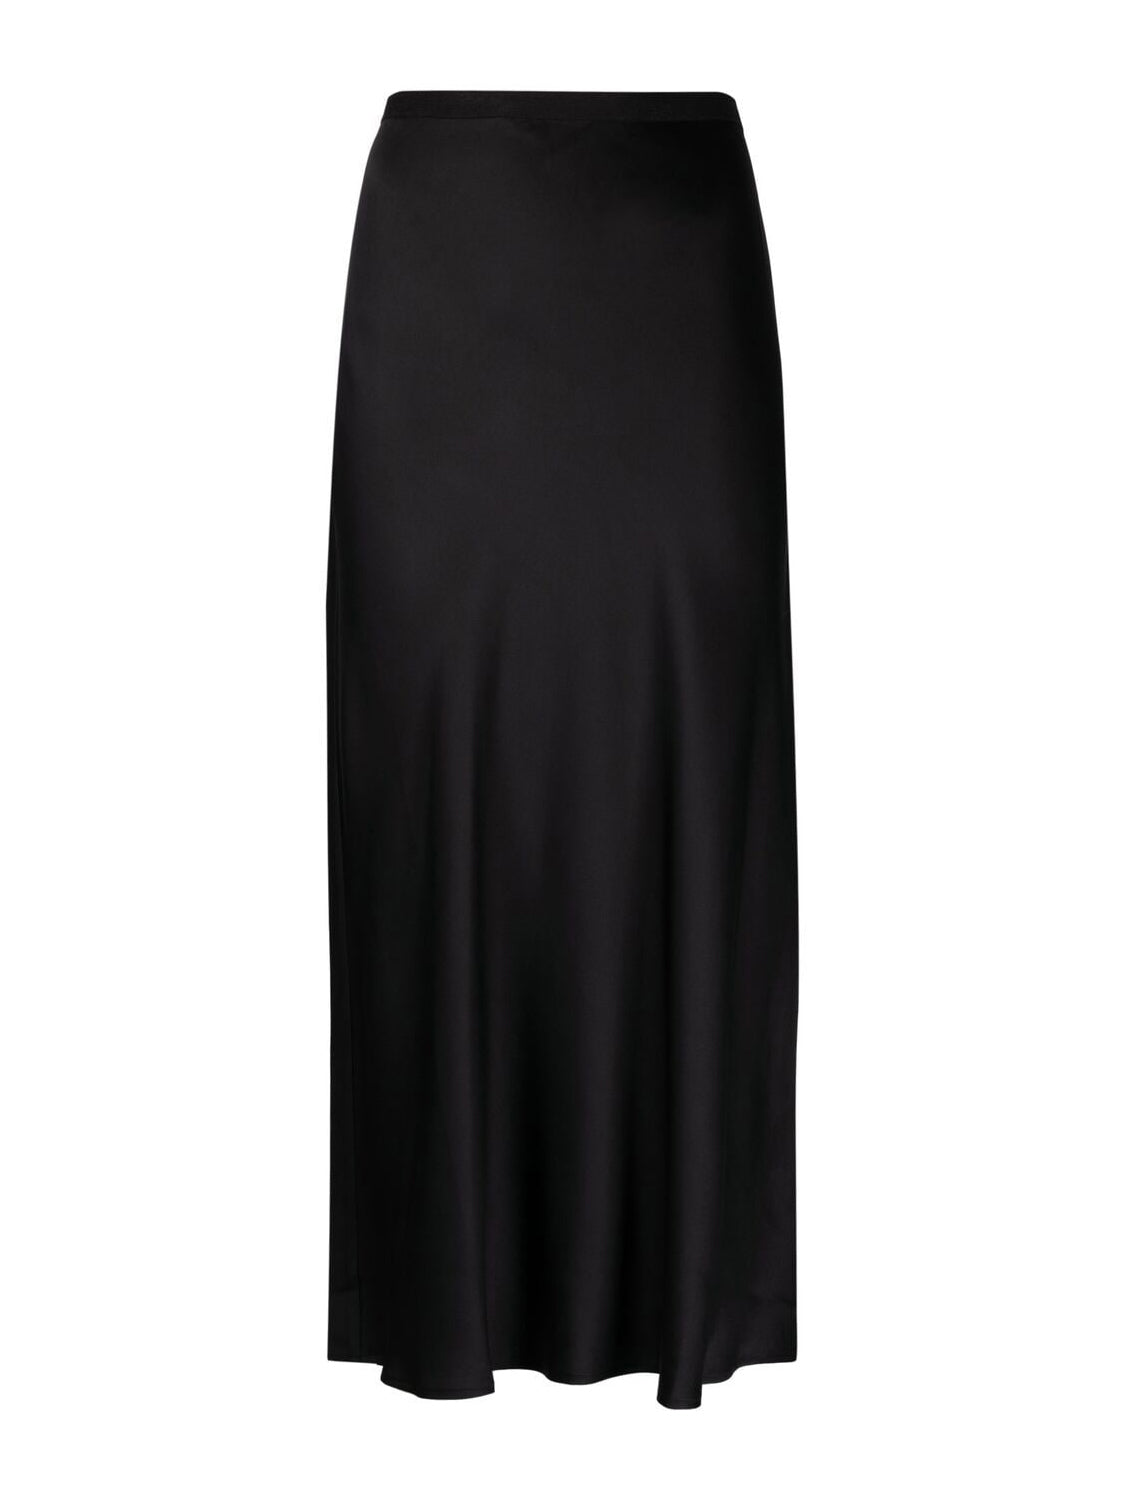 Anine Bing, Bar fluted silk skirt, black. Sold by My o My in Helsinki. 